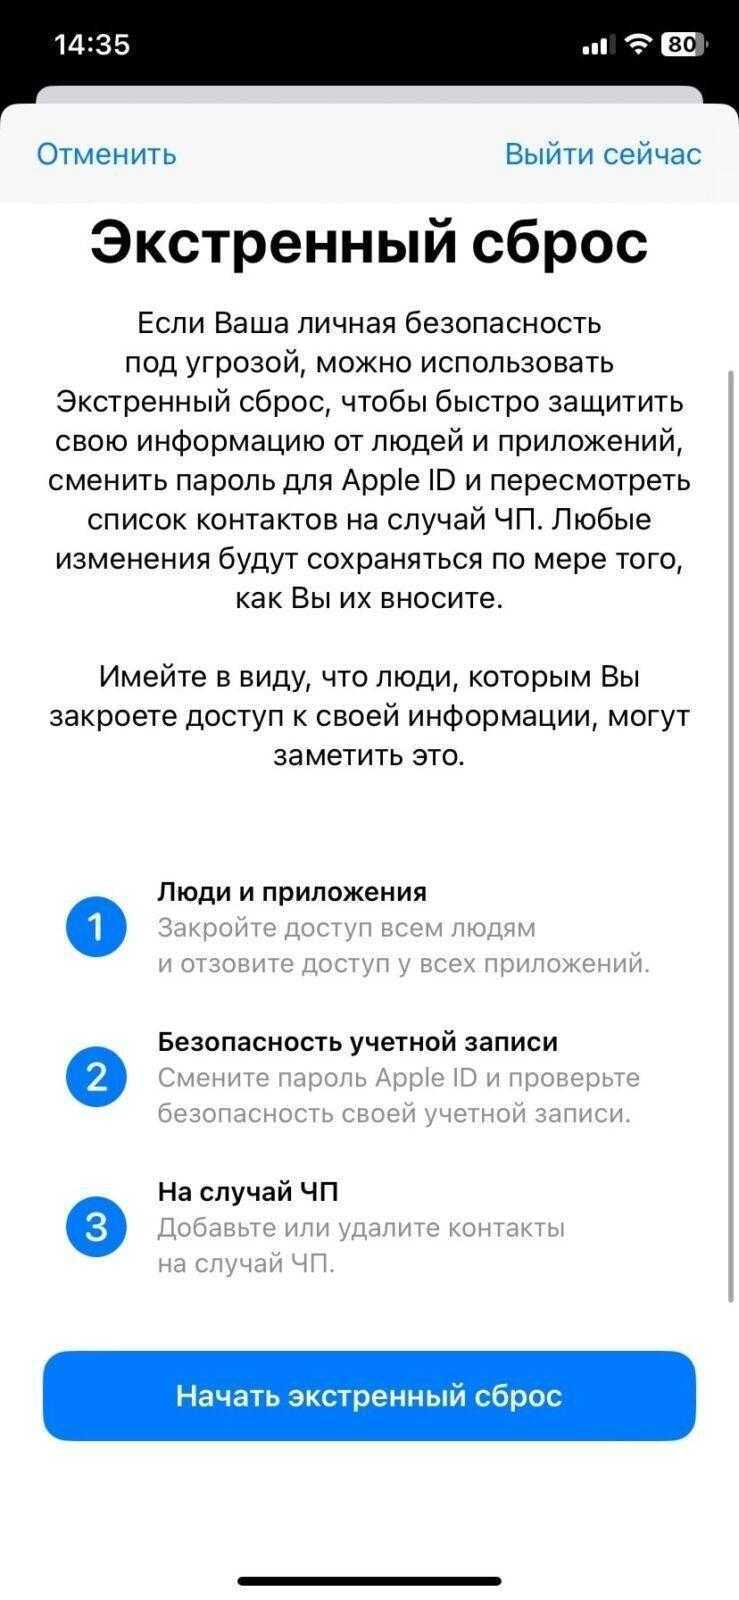 Apple iPhone: как использовать функции безопасности (0W5J6ZKtakk)